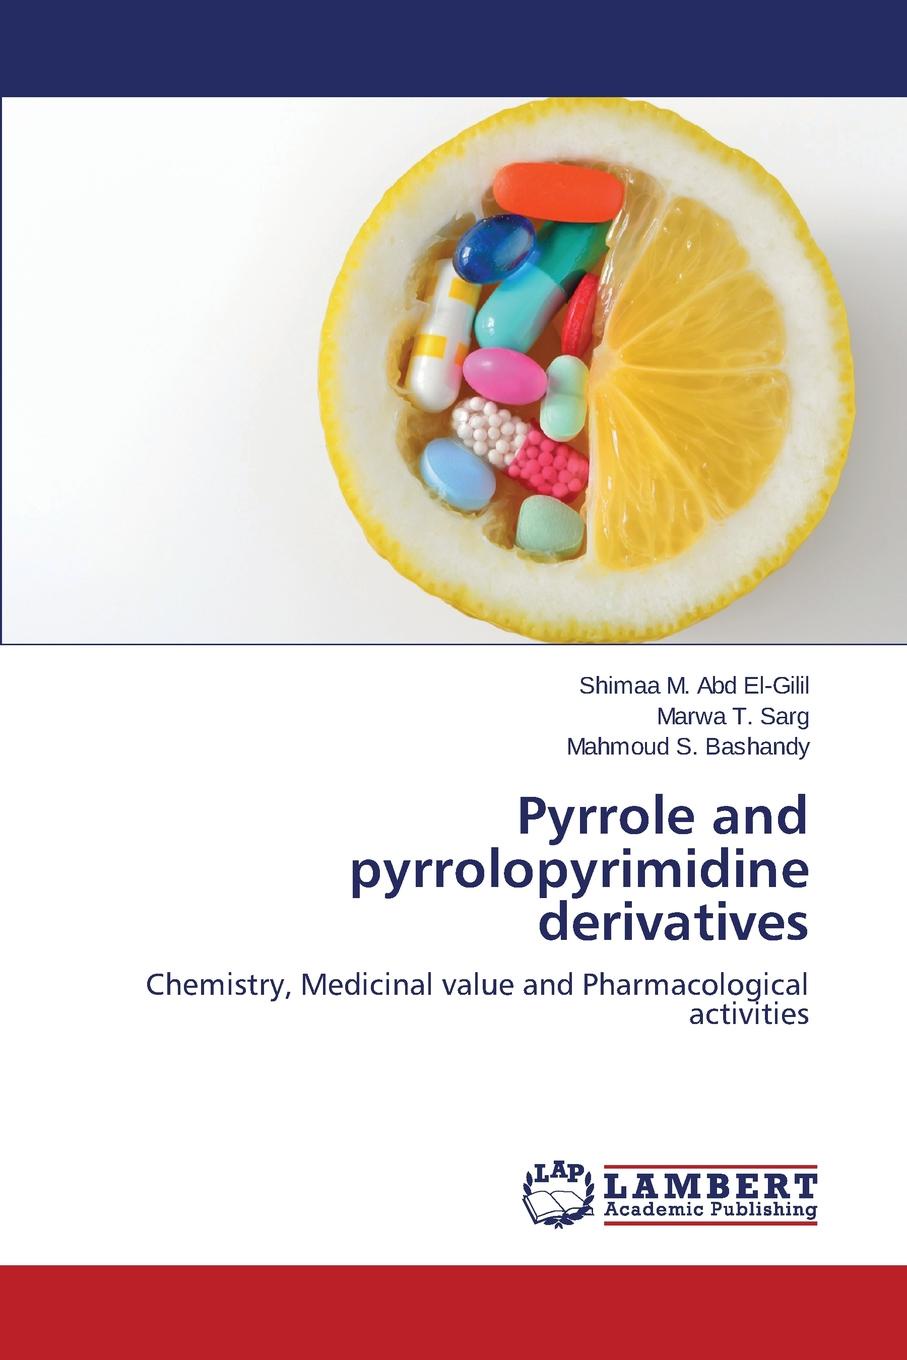 Pyrrole and pyrrolopyrimidine derivatives